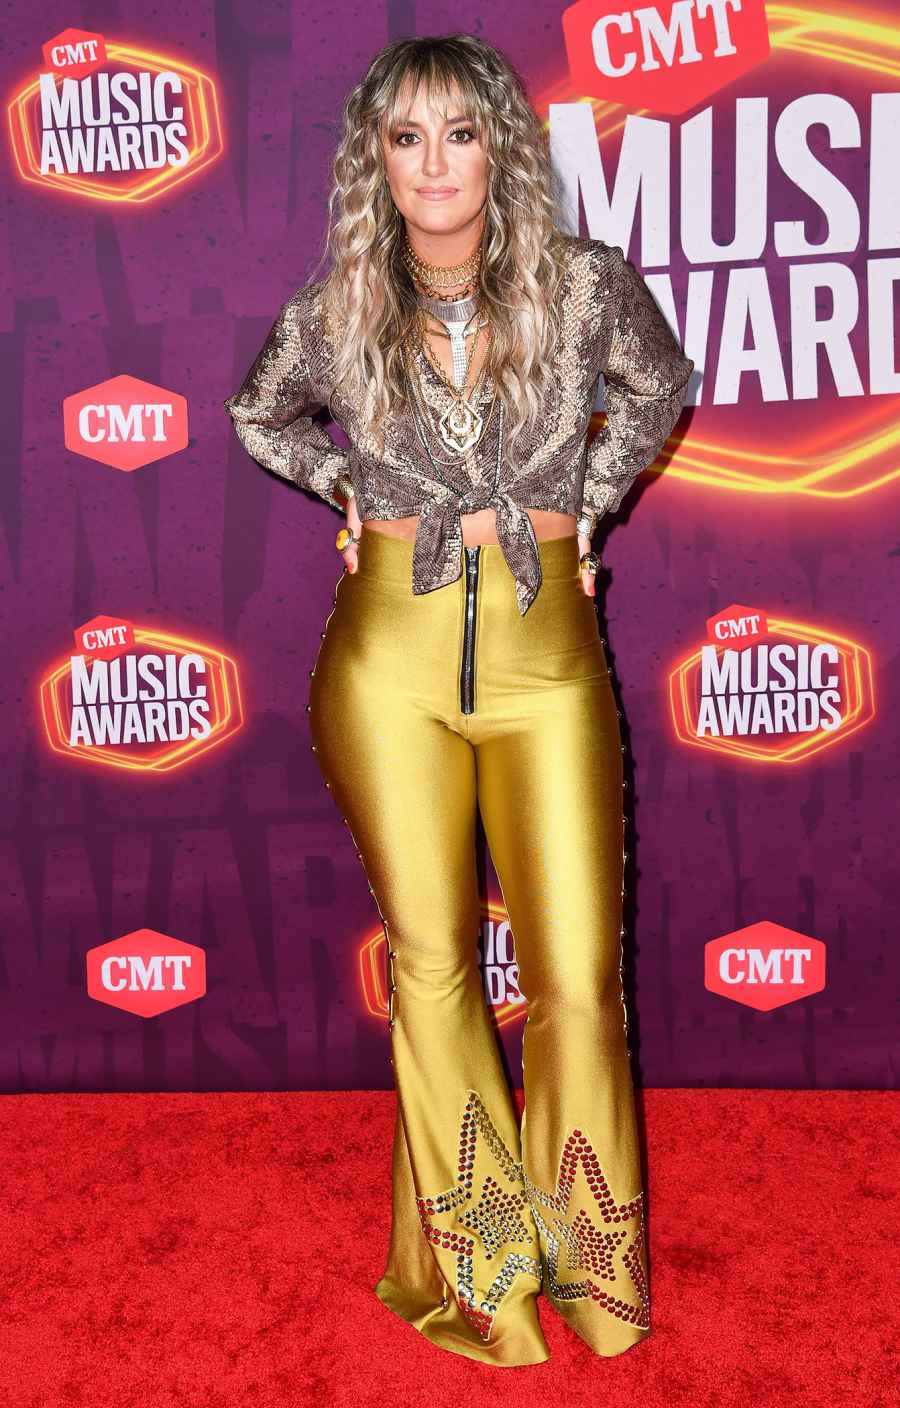 CMT Music Awards 2021 Red Carpet Arrivals - Lainey Wilson